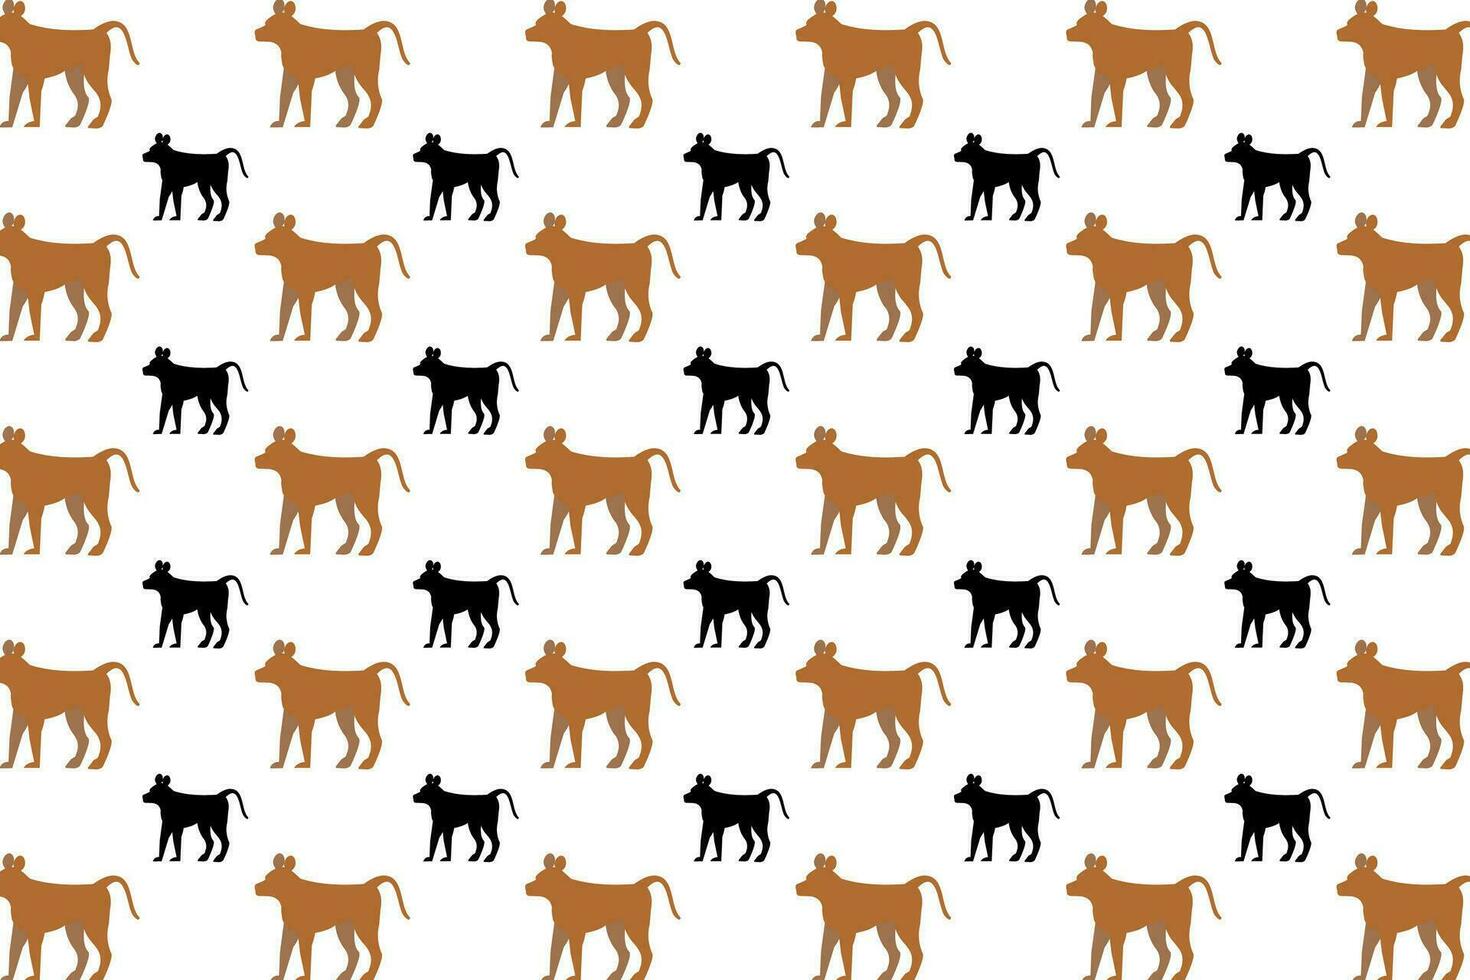 Flat Monkey Animal Pattern Background vector